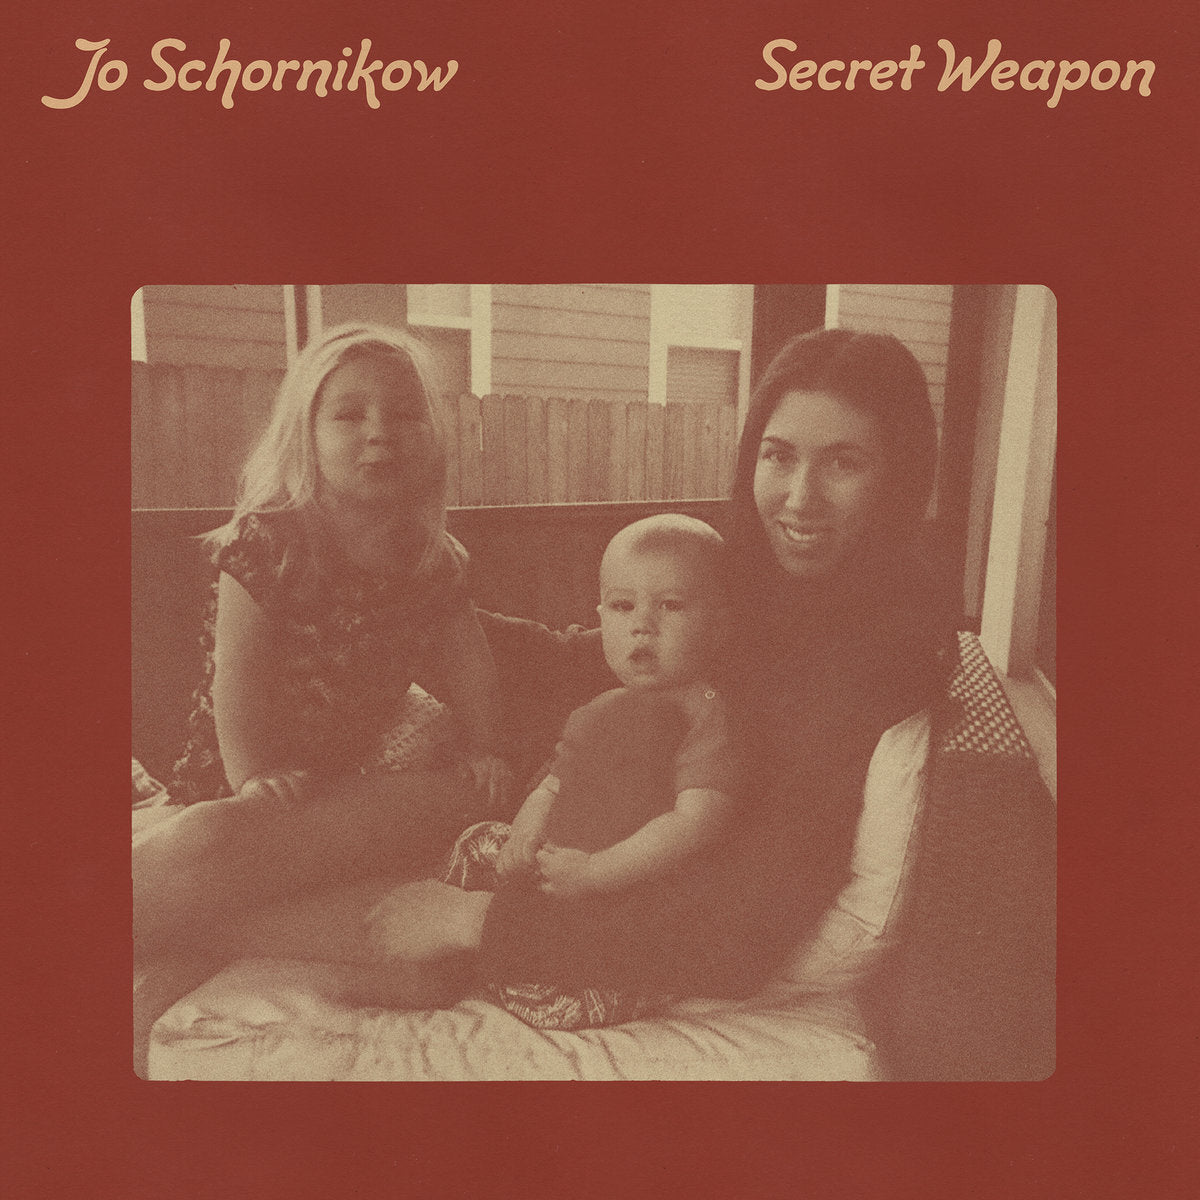 Schornikow, Jo "Secret Weapon" [White Vinyl]